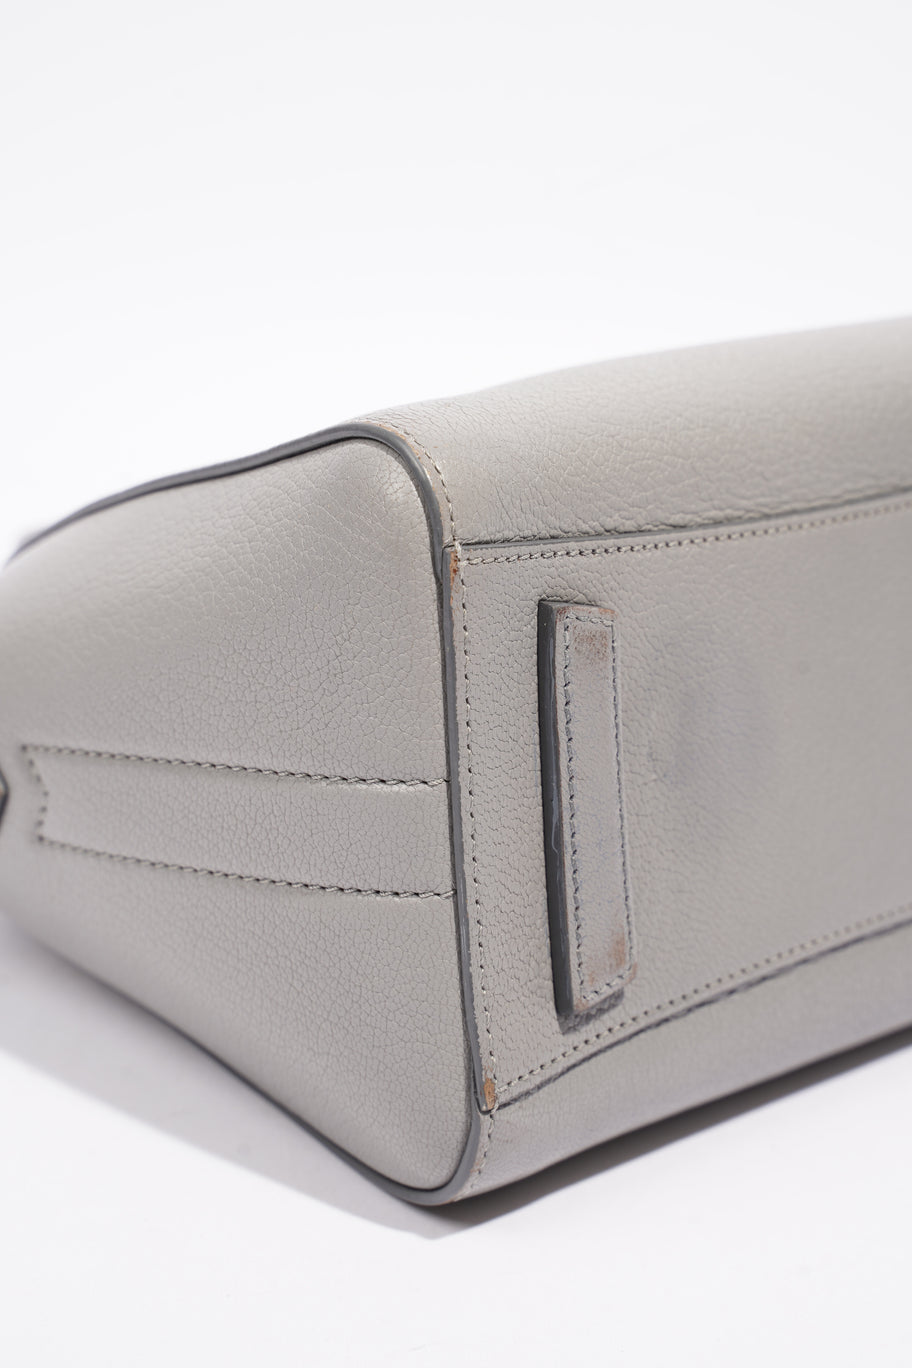 Mini Antigona Grey Grained Leather Image 10